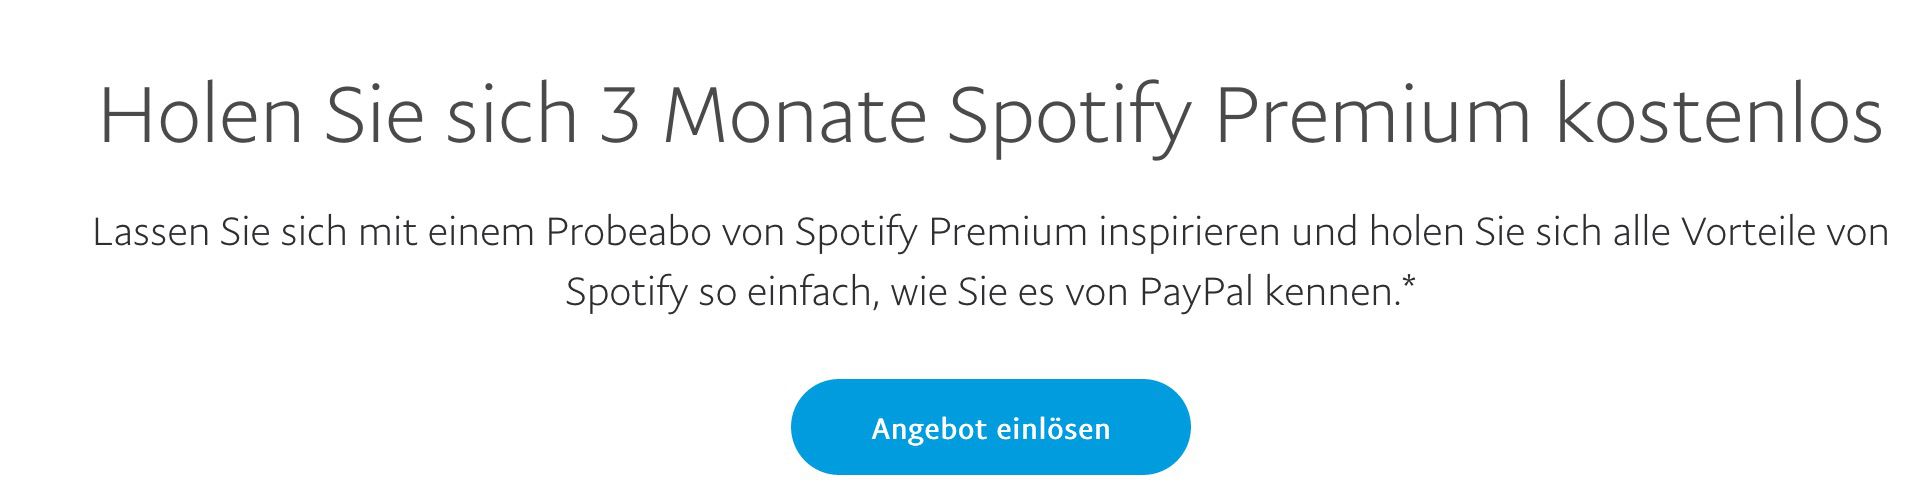 3 Monate Spotify Premium Angebot komplett kostenlos